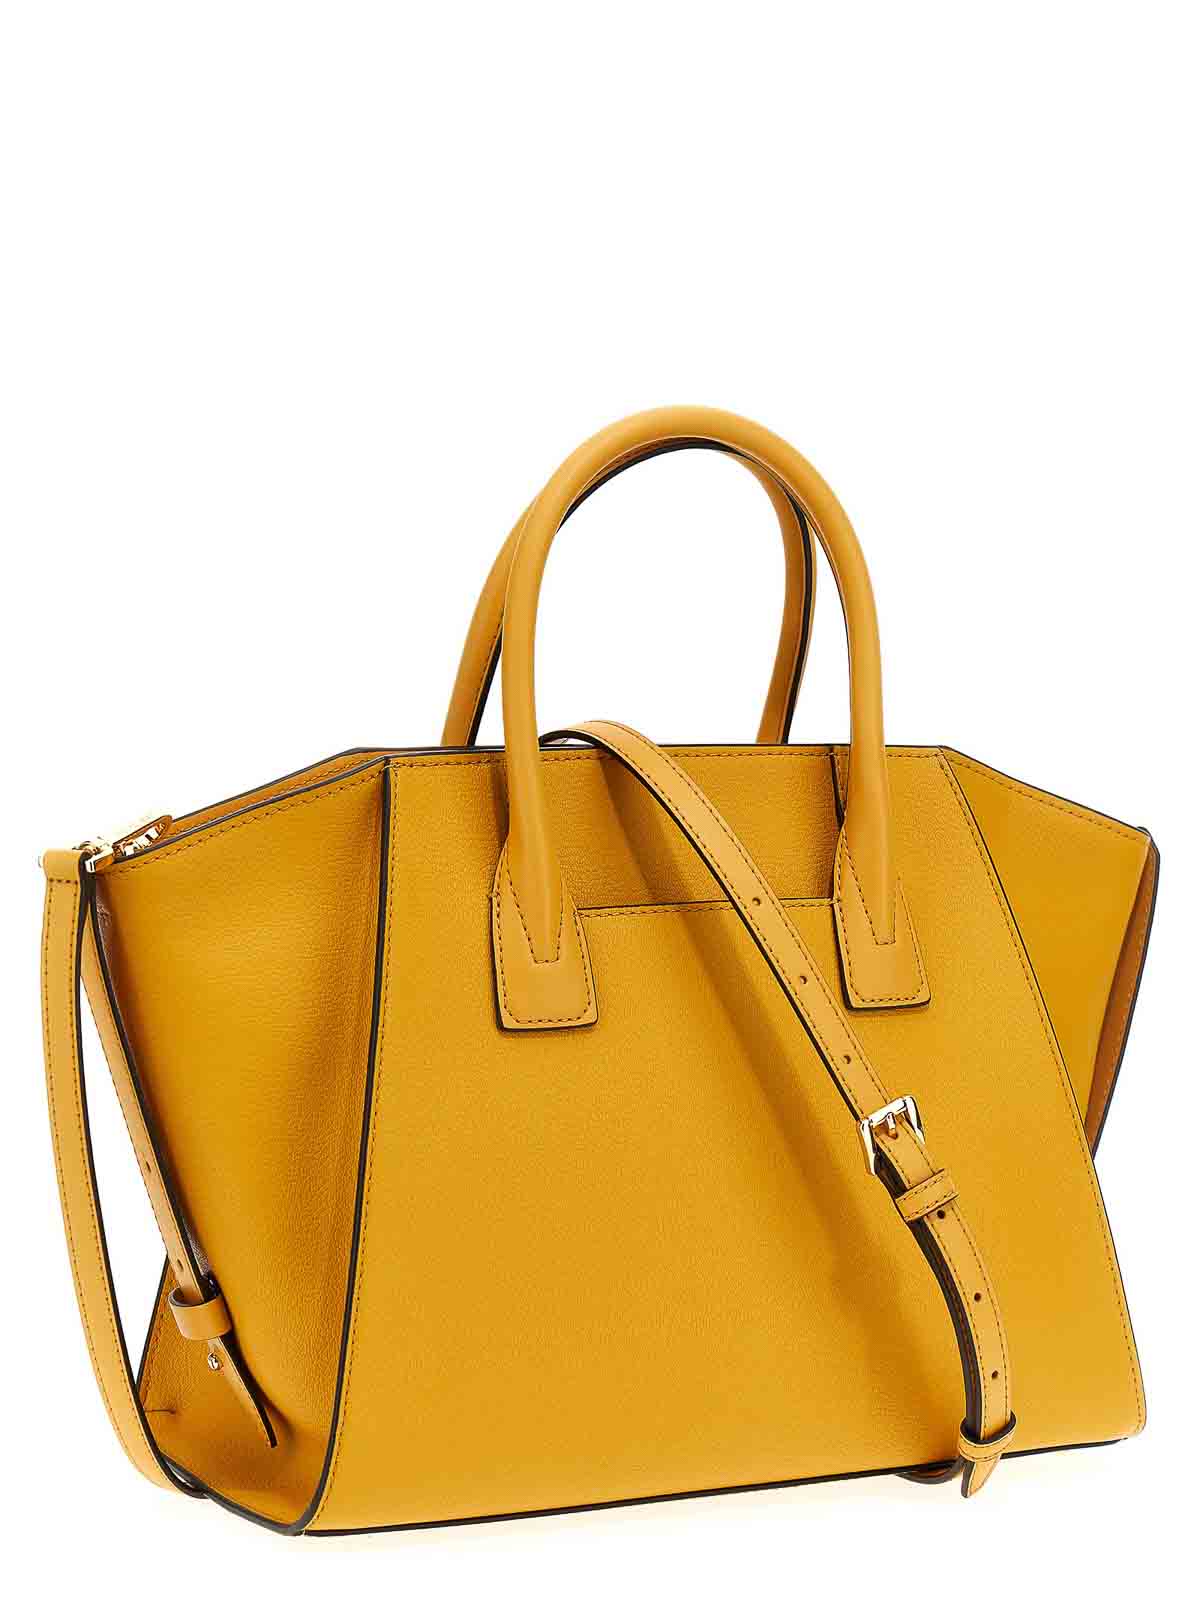 Michael Kors Small Crossbody Handbag Purse Shopper Shoulder Bag- Jasmine  Yellow | eBay